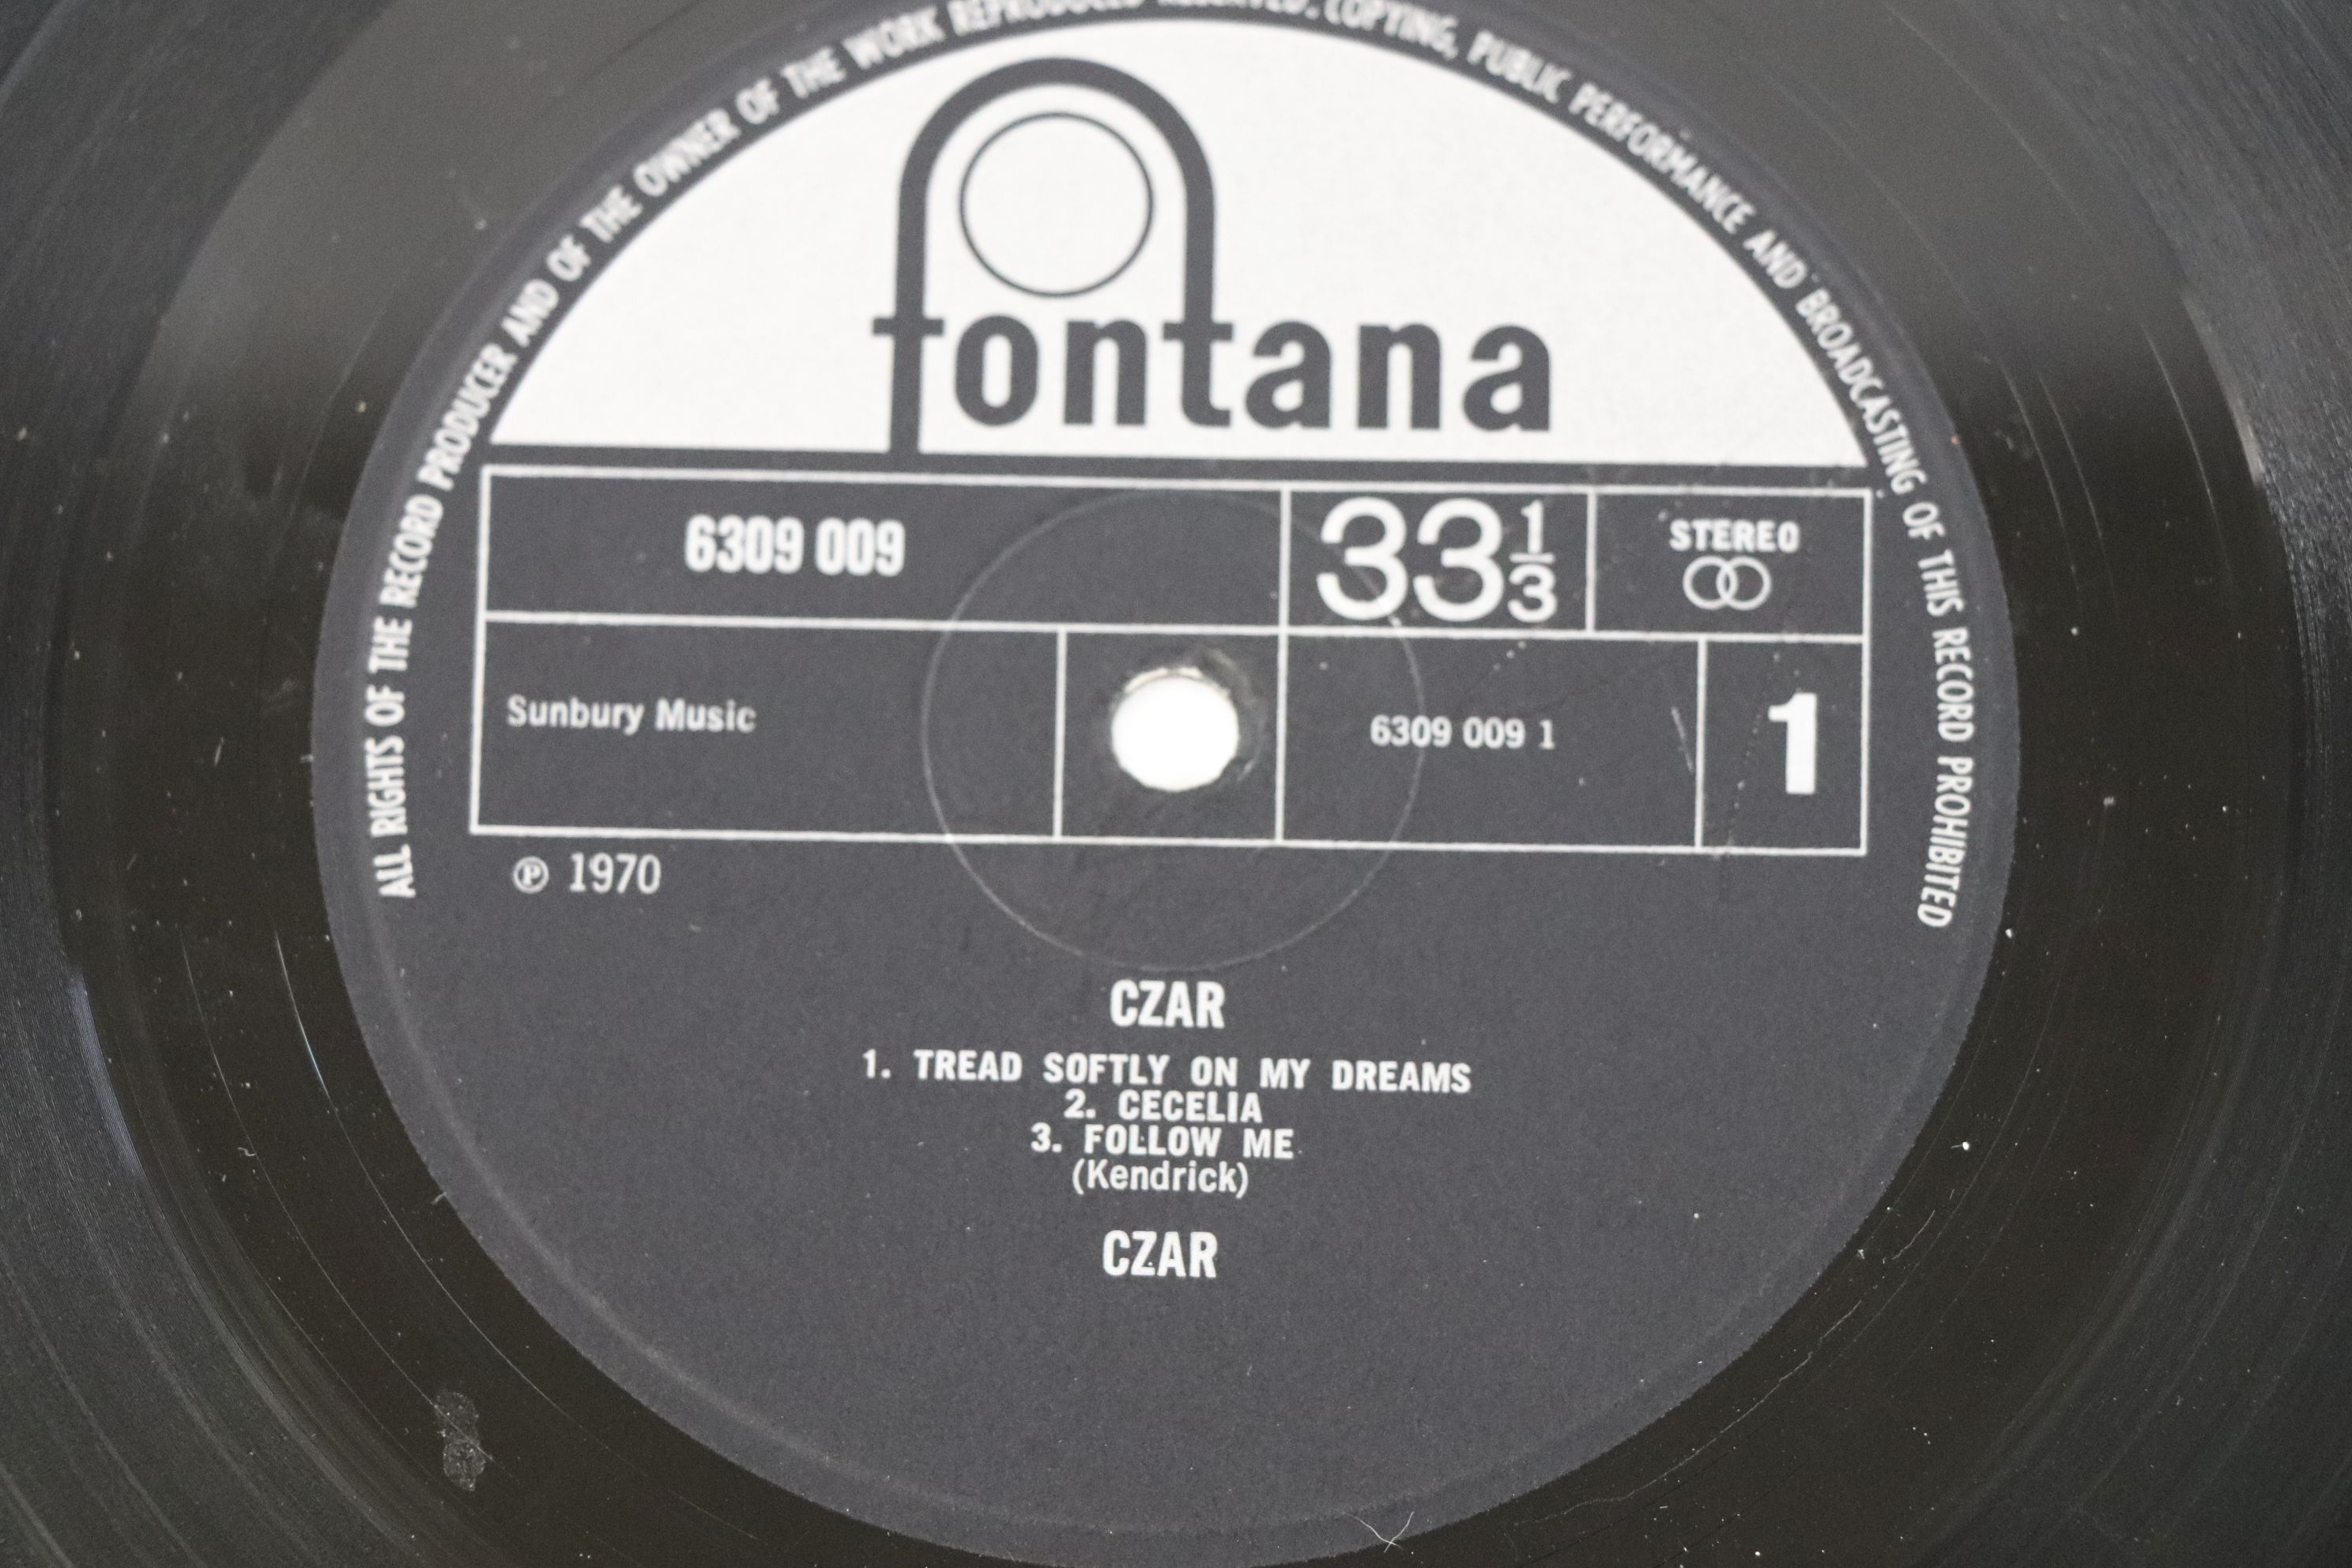 Vinyl - Czar - Self Titled (Fontana 6309 009) A nice example on the silver and black Fontana - Image 5 of 7